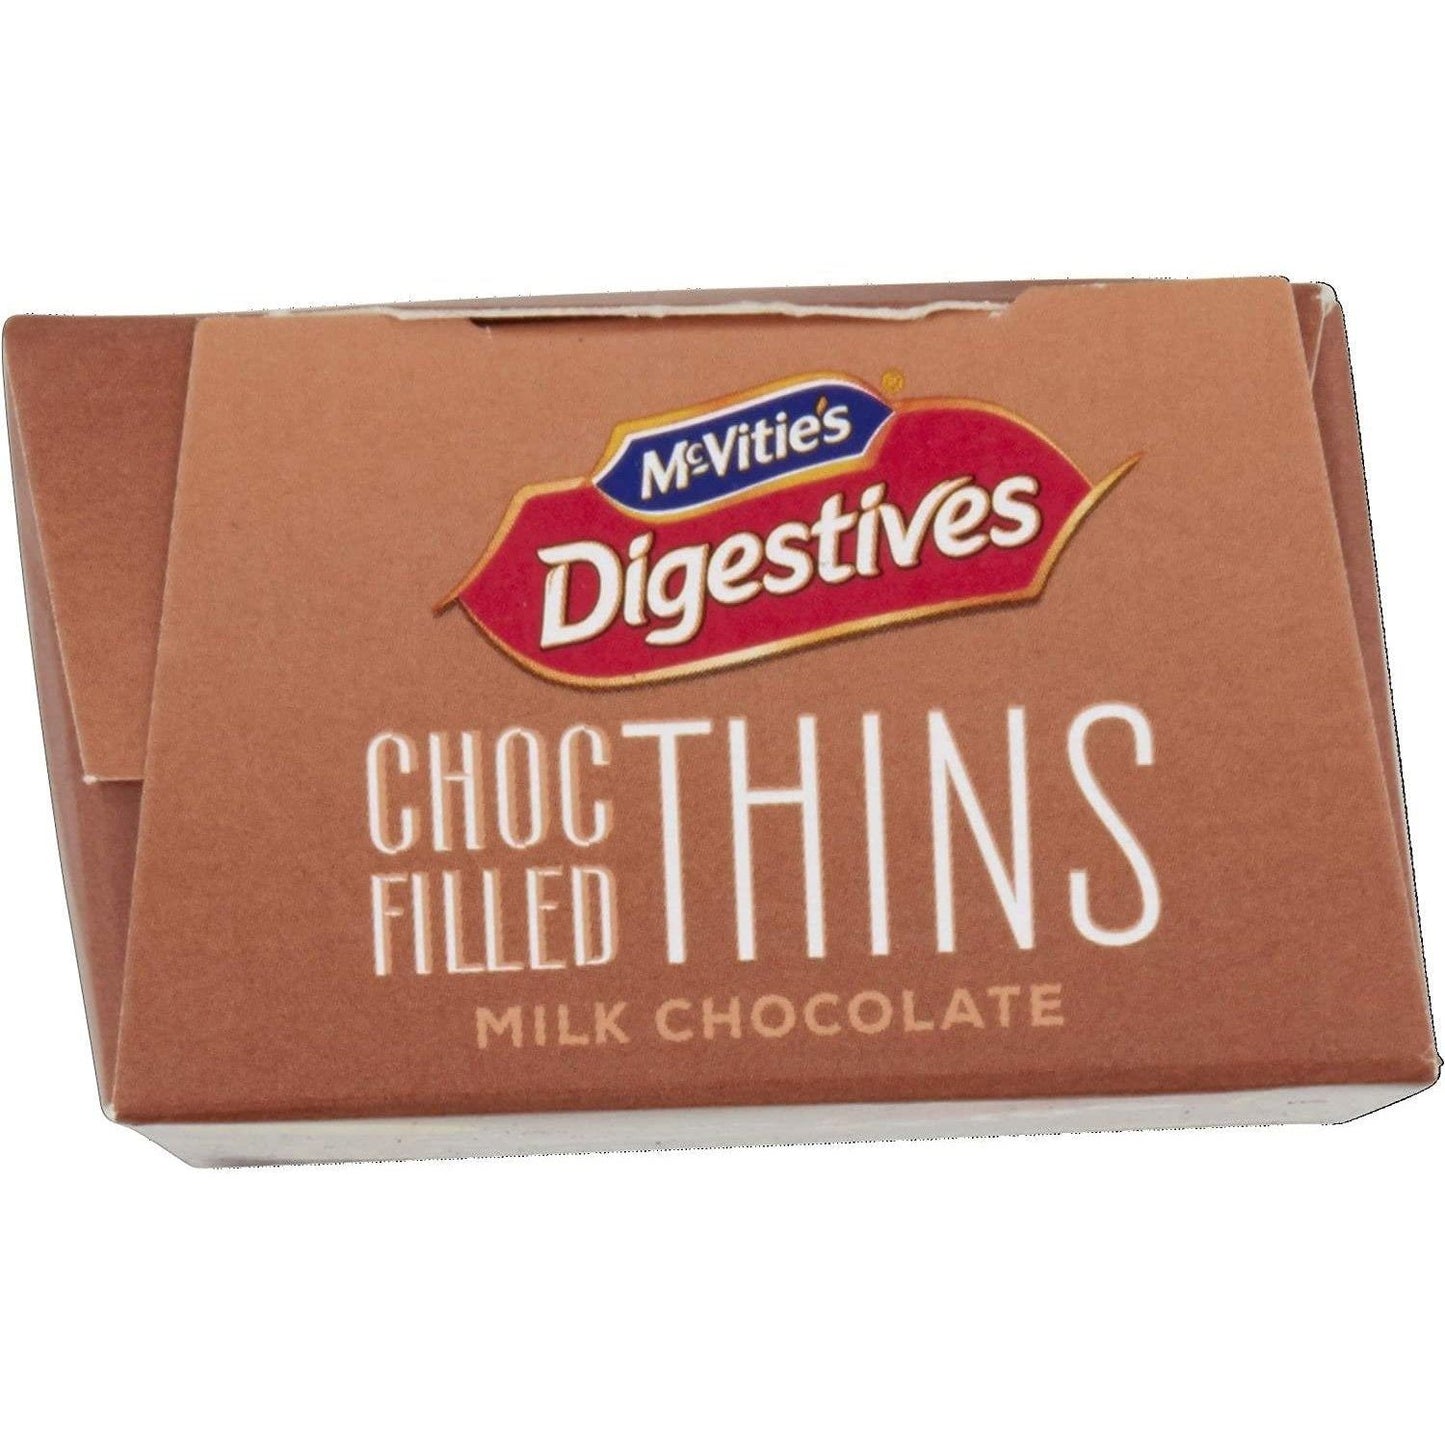 McVitie's Digestives Filled Thins Milk Chocolate 130g